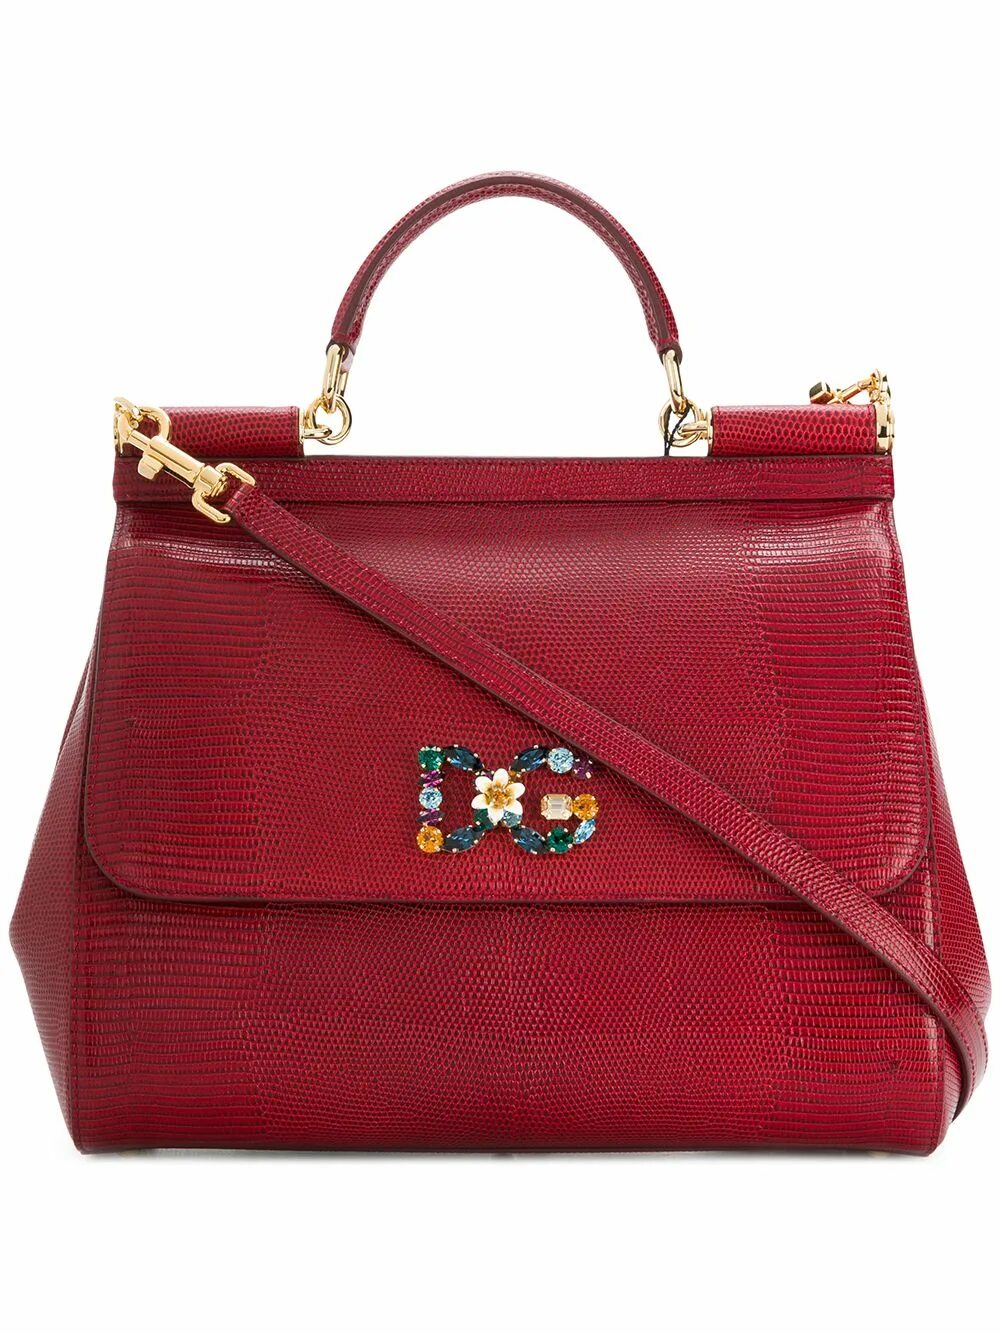 DG Sicily сумка Medium. Dolce Gabbana сумка bb6002at4141 Red. Сумка Dolce Gabbana Sicily 2016. Сумка dolce gabbana sicily